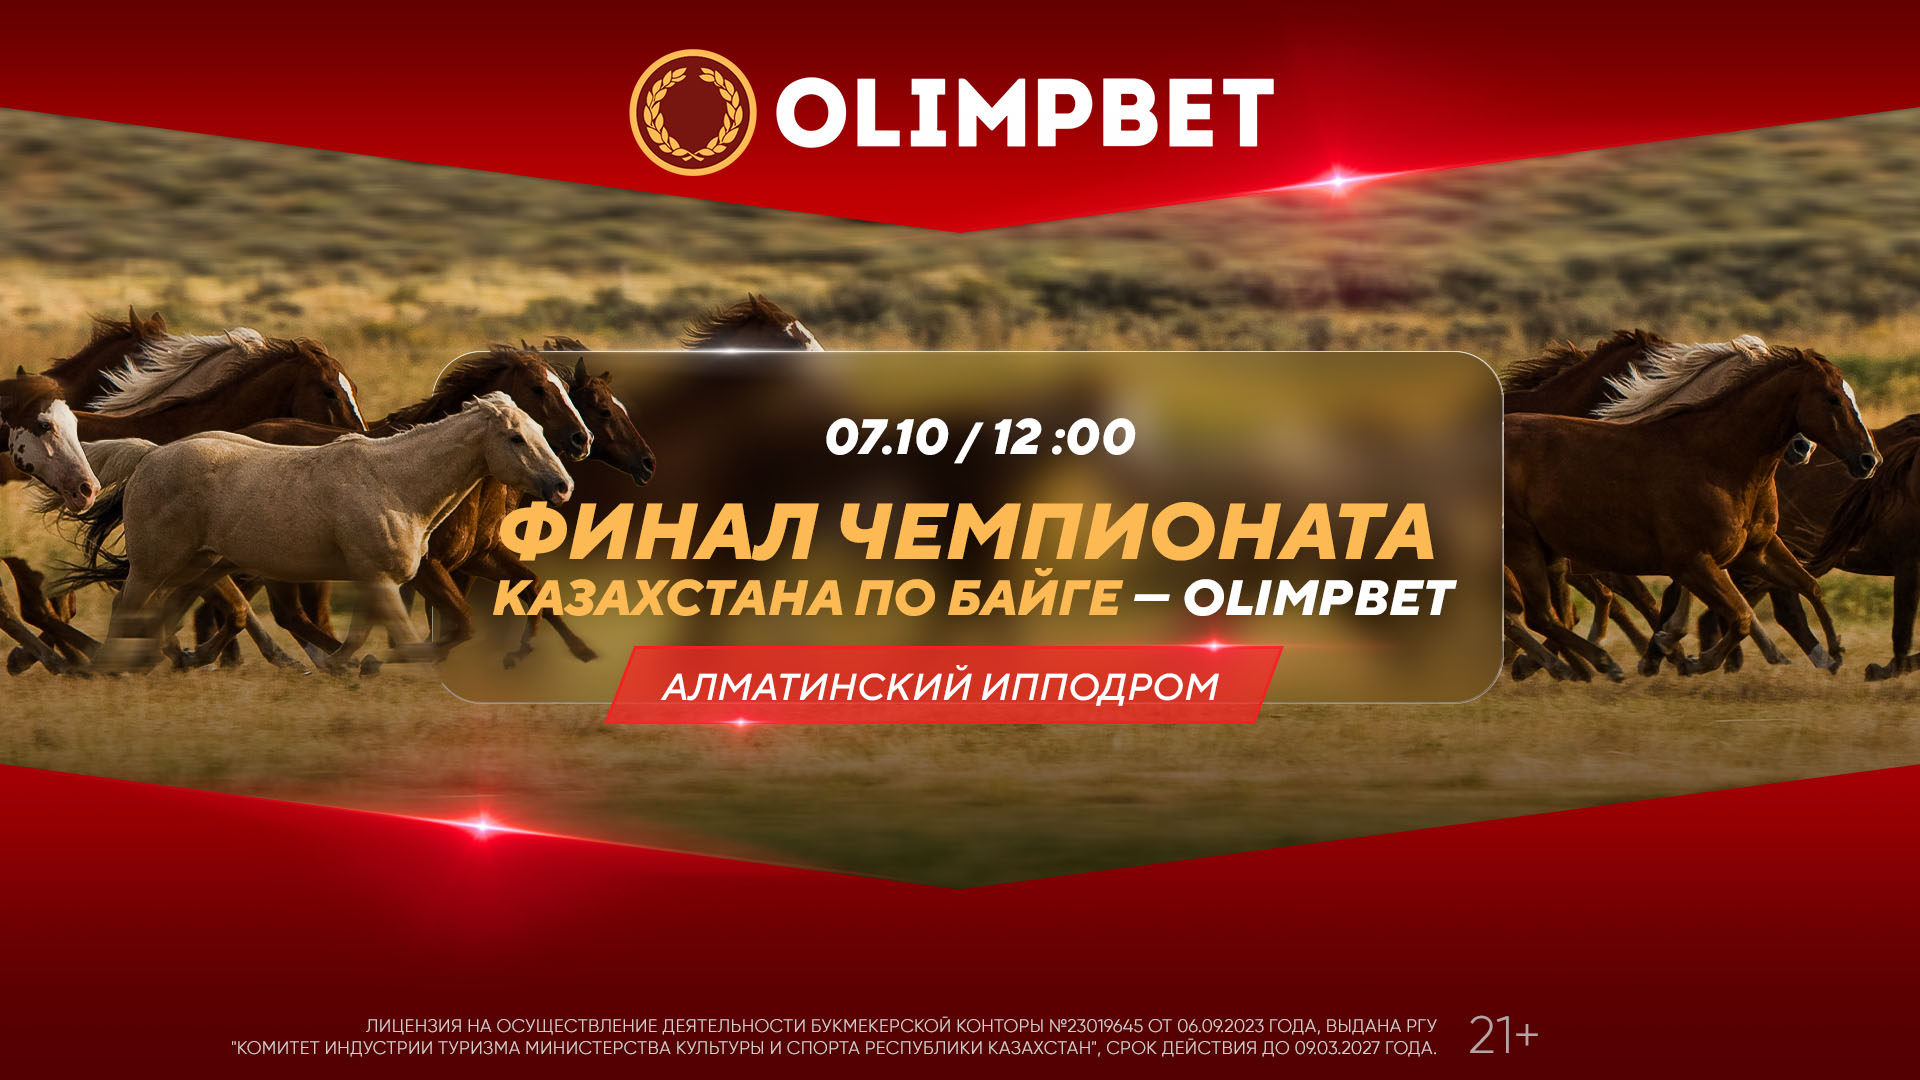 БК Olimpbet анонсировала финал Чемионата Казахстана по байге